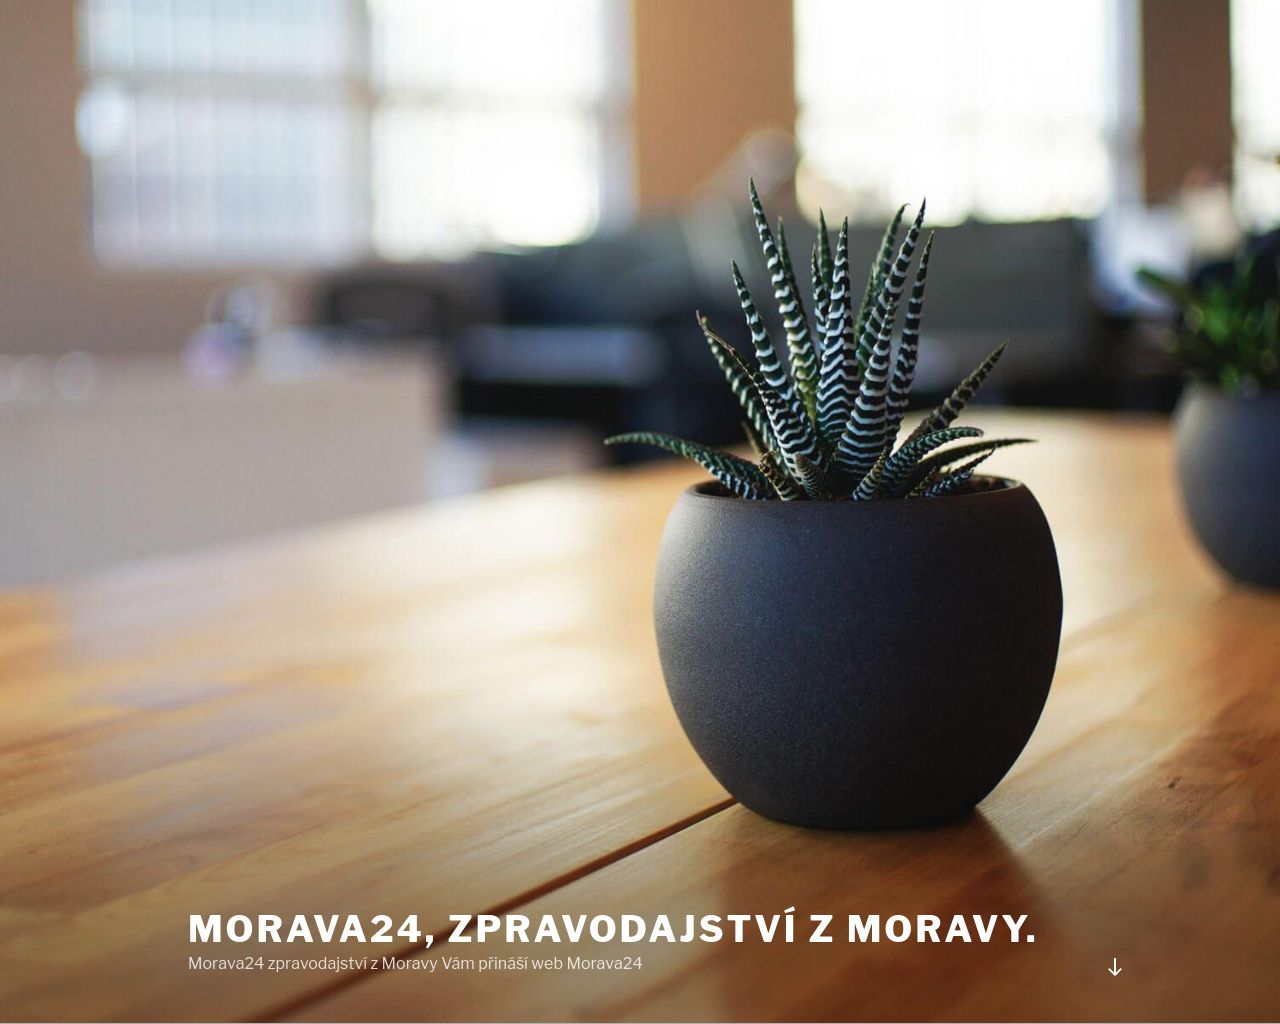 Site Image morava24.cz v 1280x1024